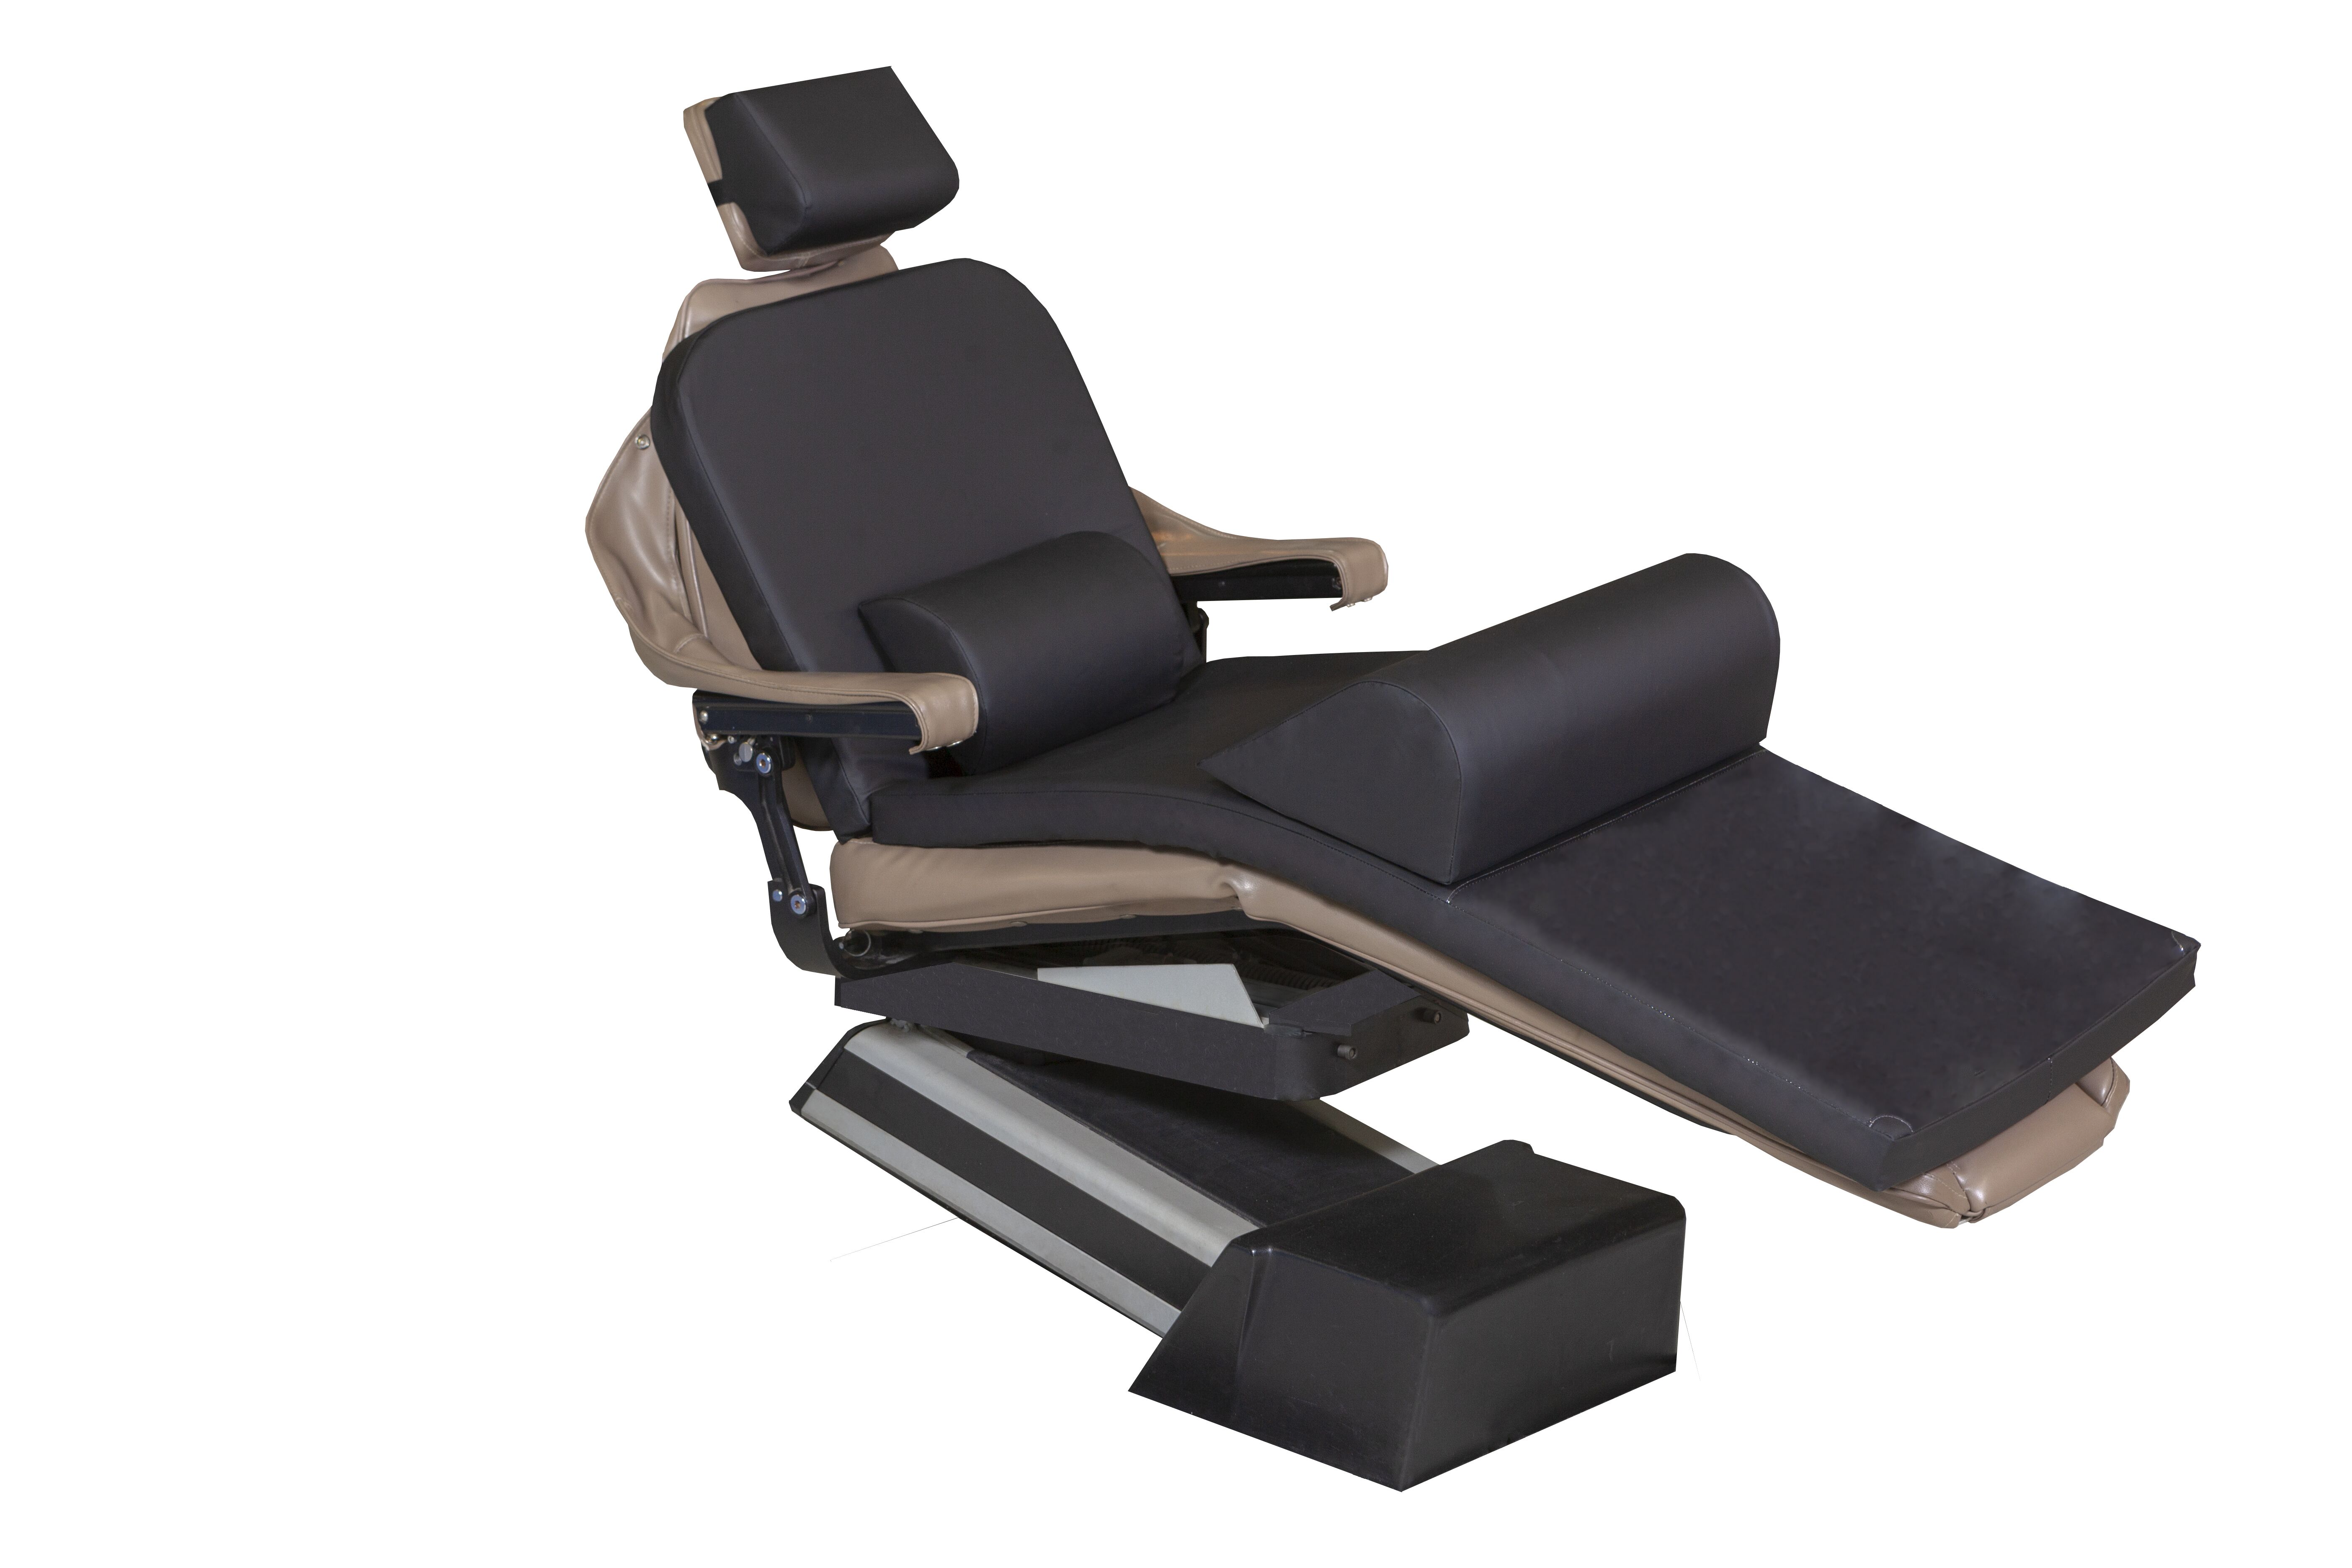 MedipPosture Dental Chair Overlay w/3.5" Icore Memory Headrest